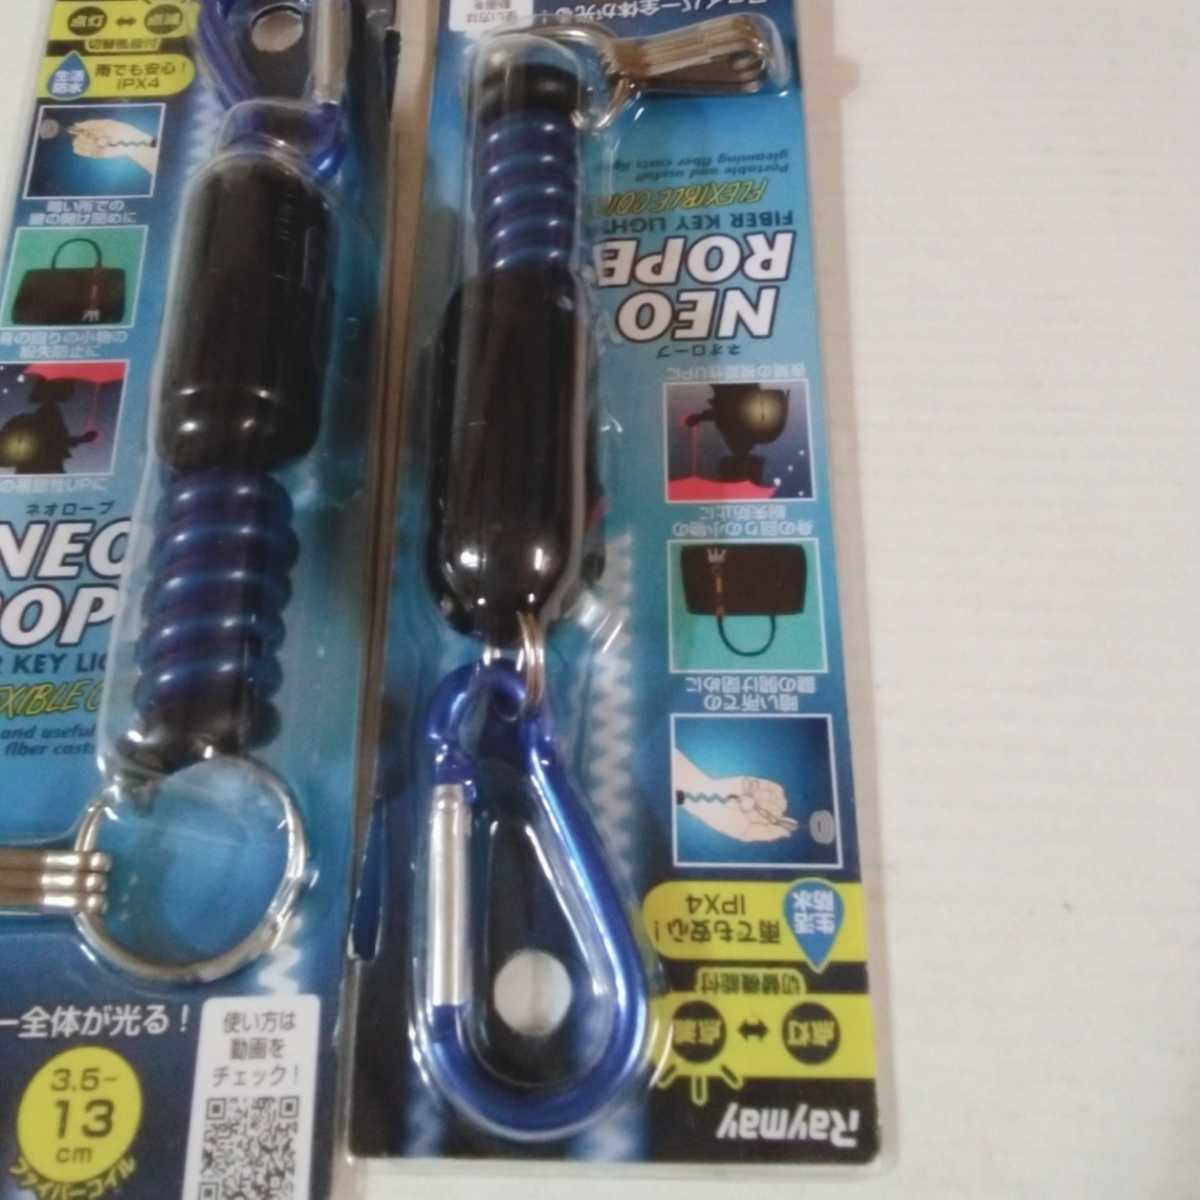  Ray mei Neo rope fibre key light coil type blue 2 set 